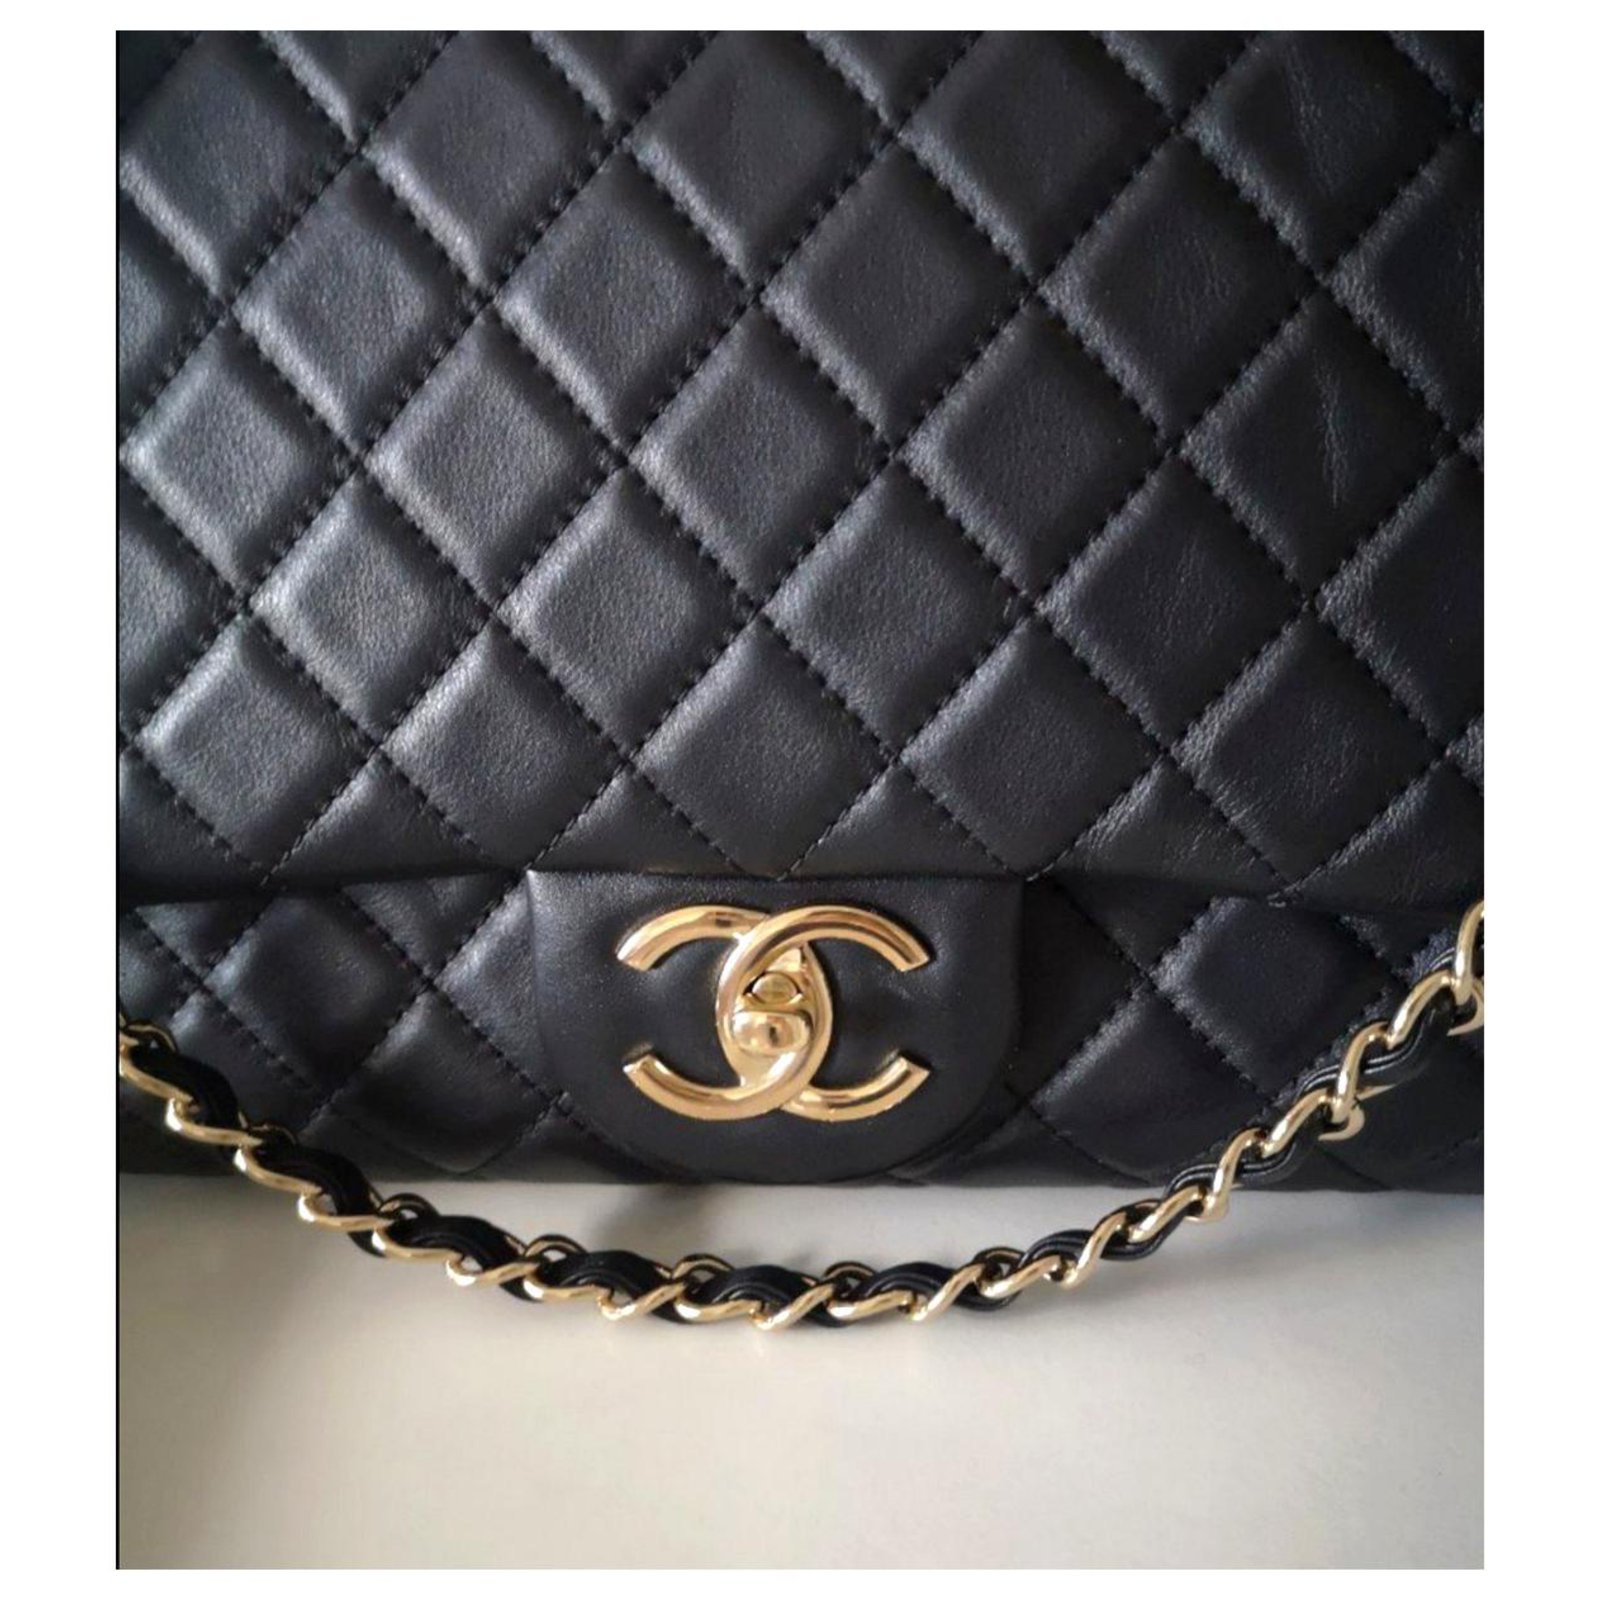 Chanel XXL travel classic flap bag